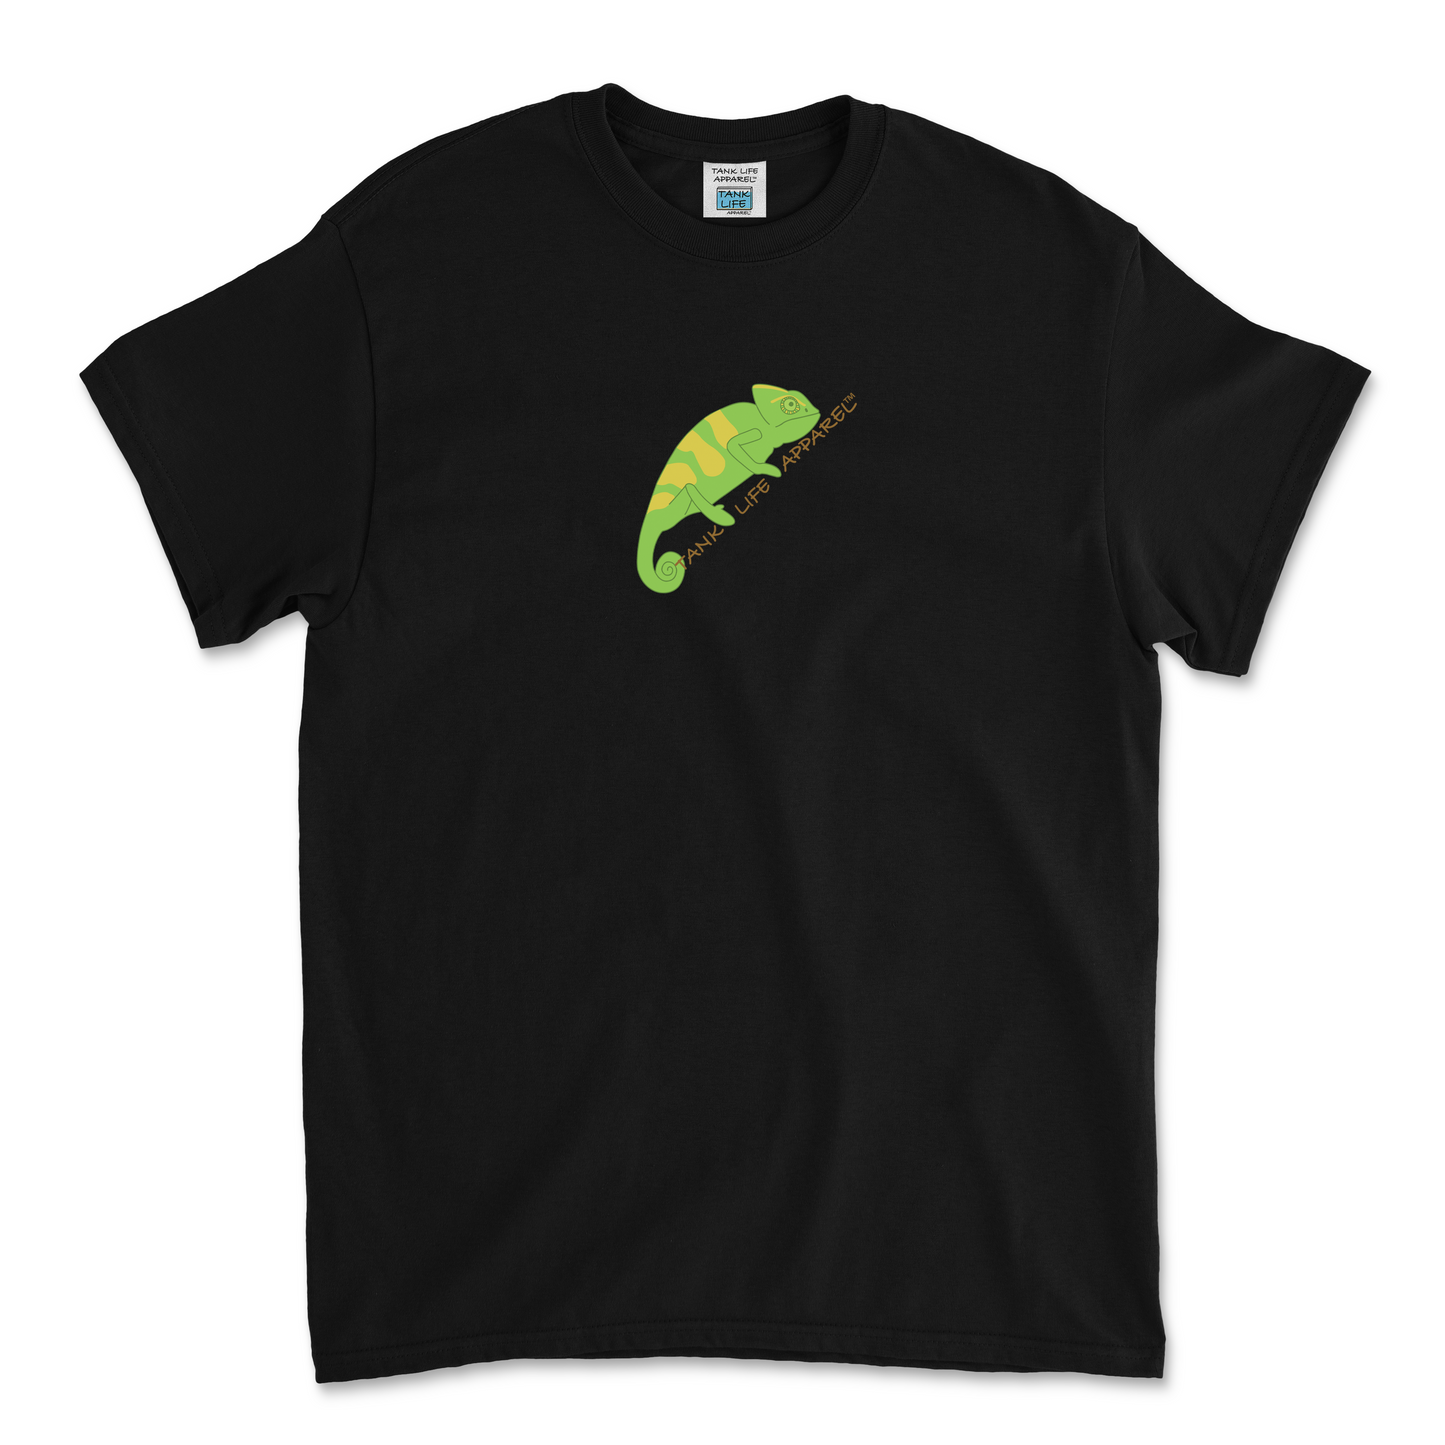 Tank Life Apparel veiled chameleon design on a youth tee. Kid's green chameleon pet shirt.